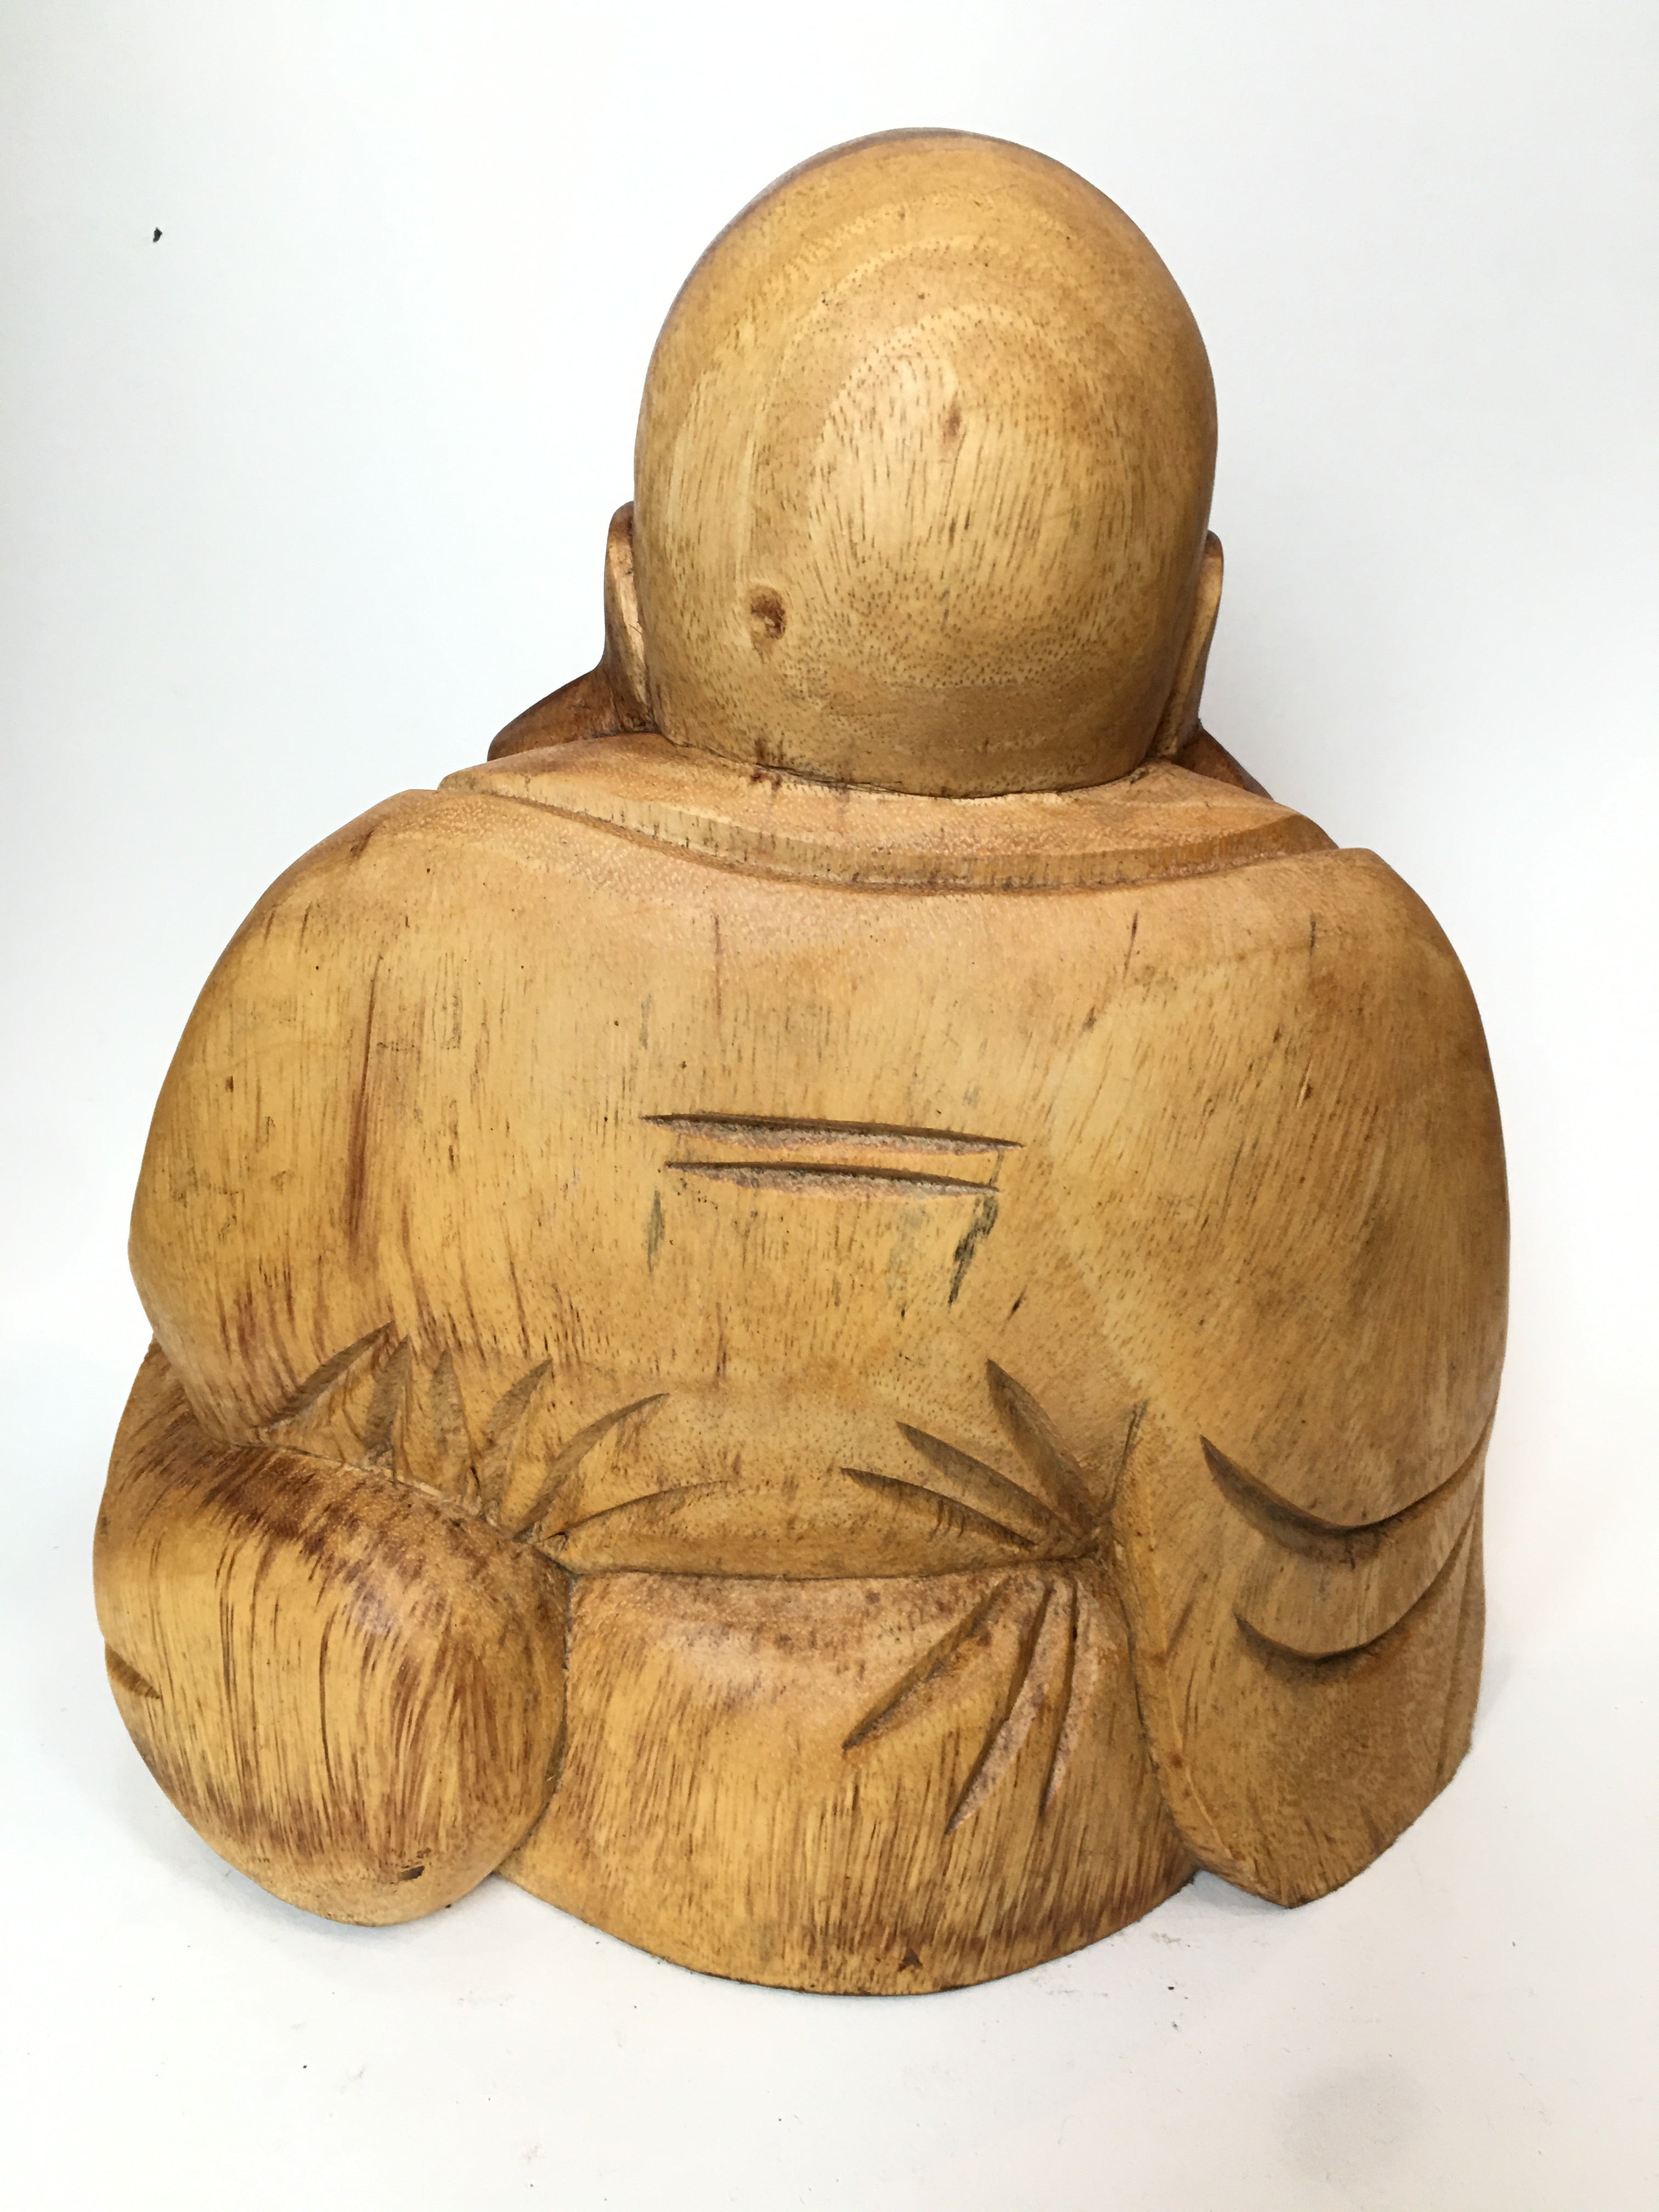 WOODEN HAPPY BUDDHA STATUE Figure 30 cm D